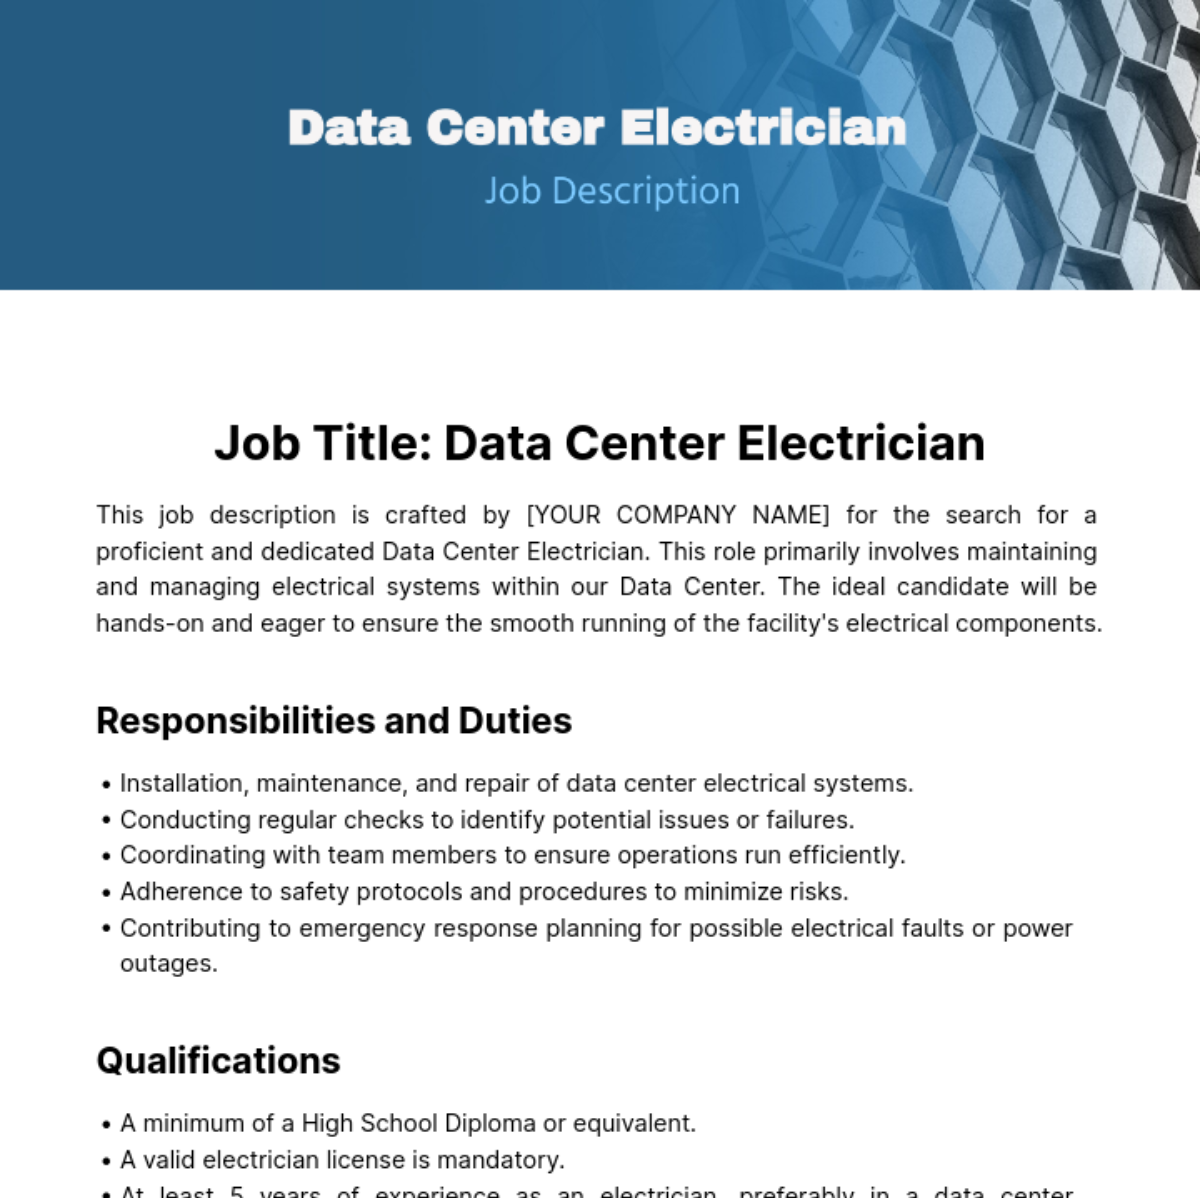 Data Center Electrician Job Description Template